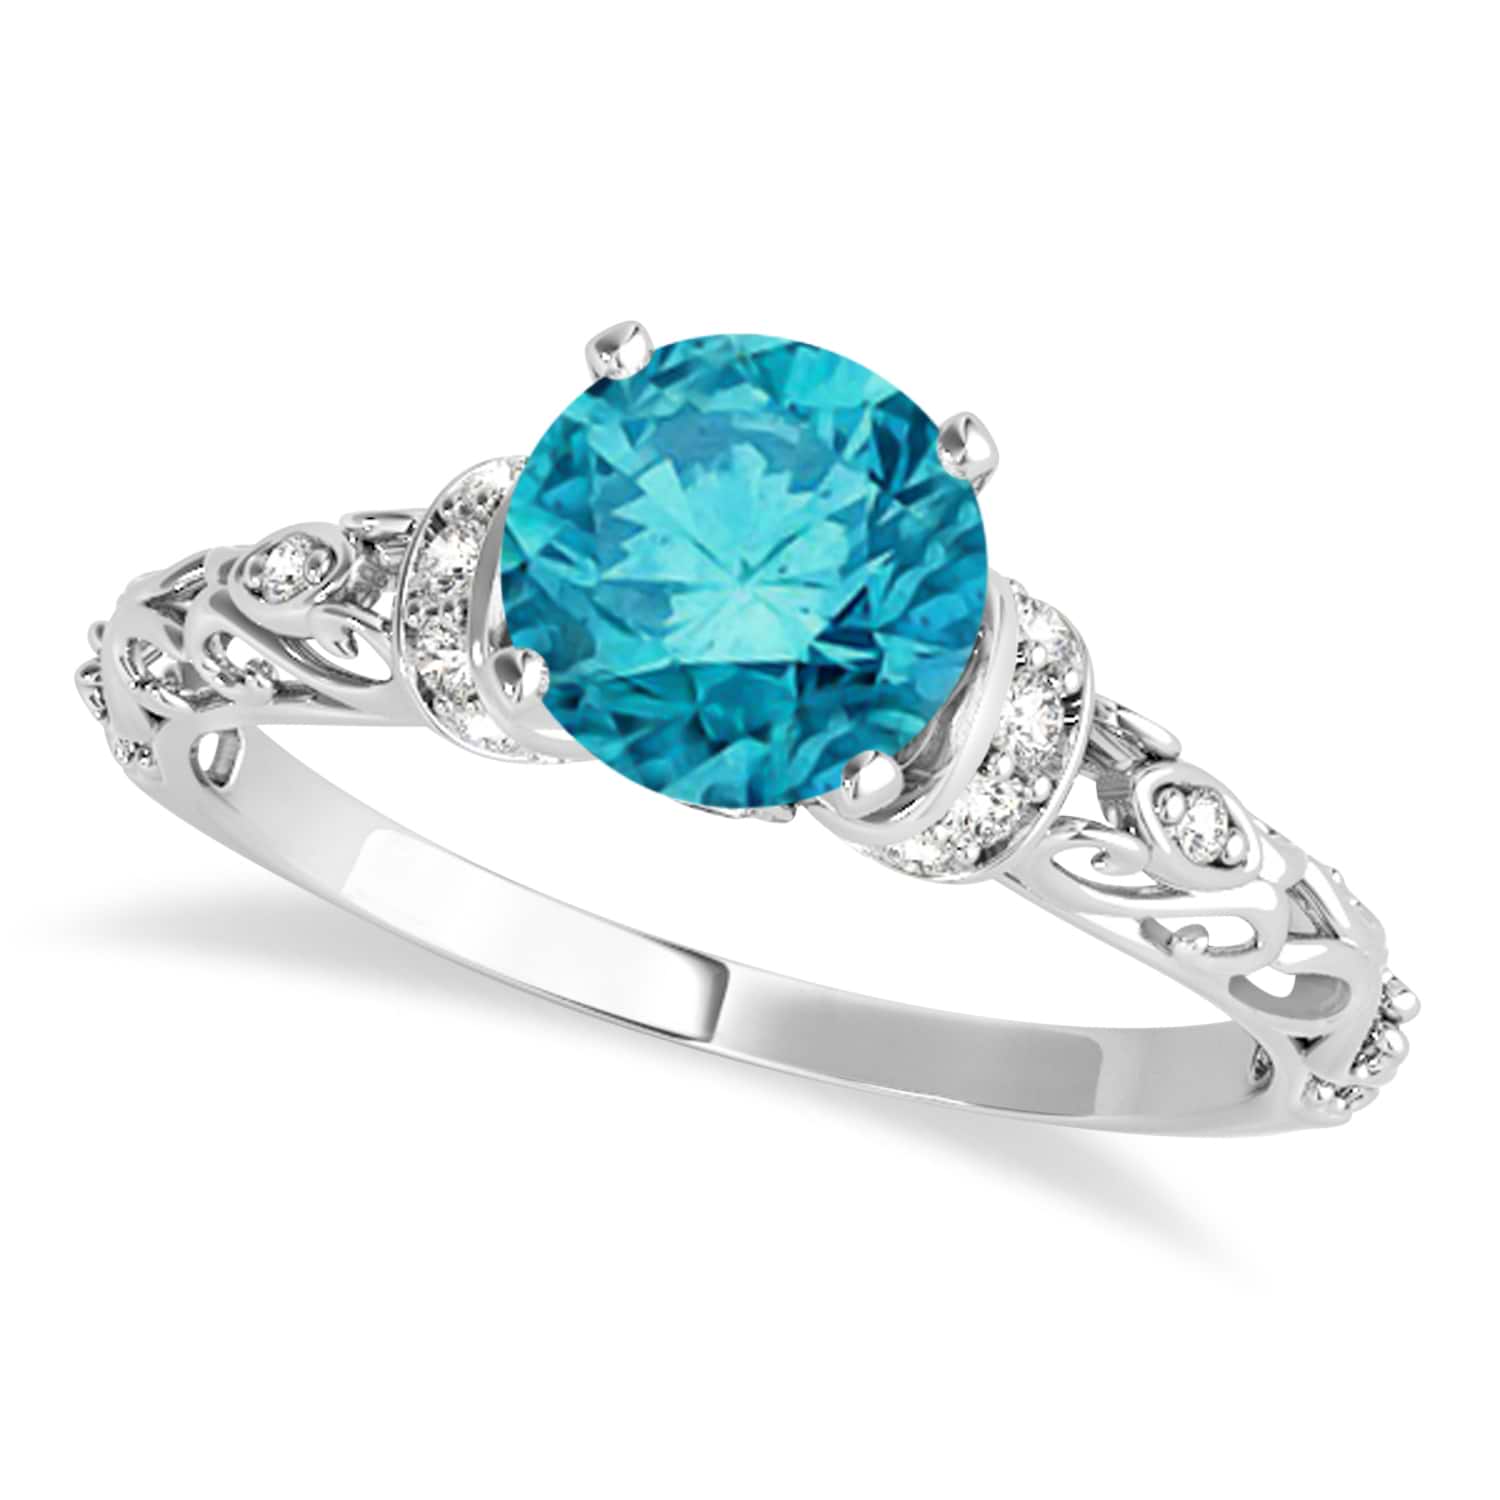 Blue Diamond & Diamond Antique Style Engagement Ring 18k White Gold (1.12ct)